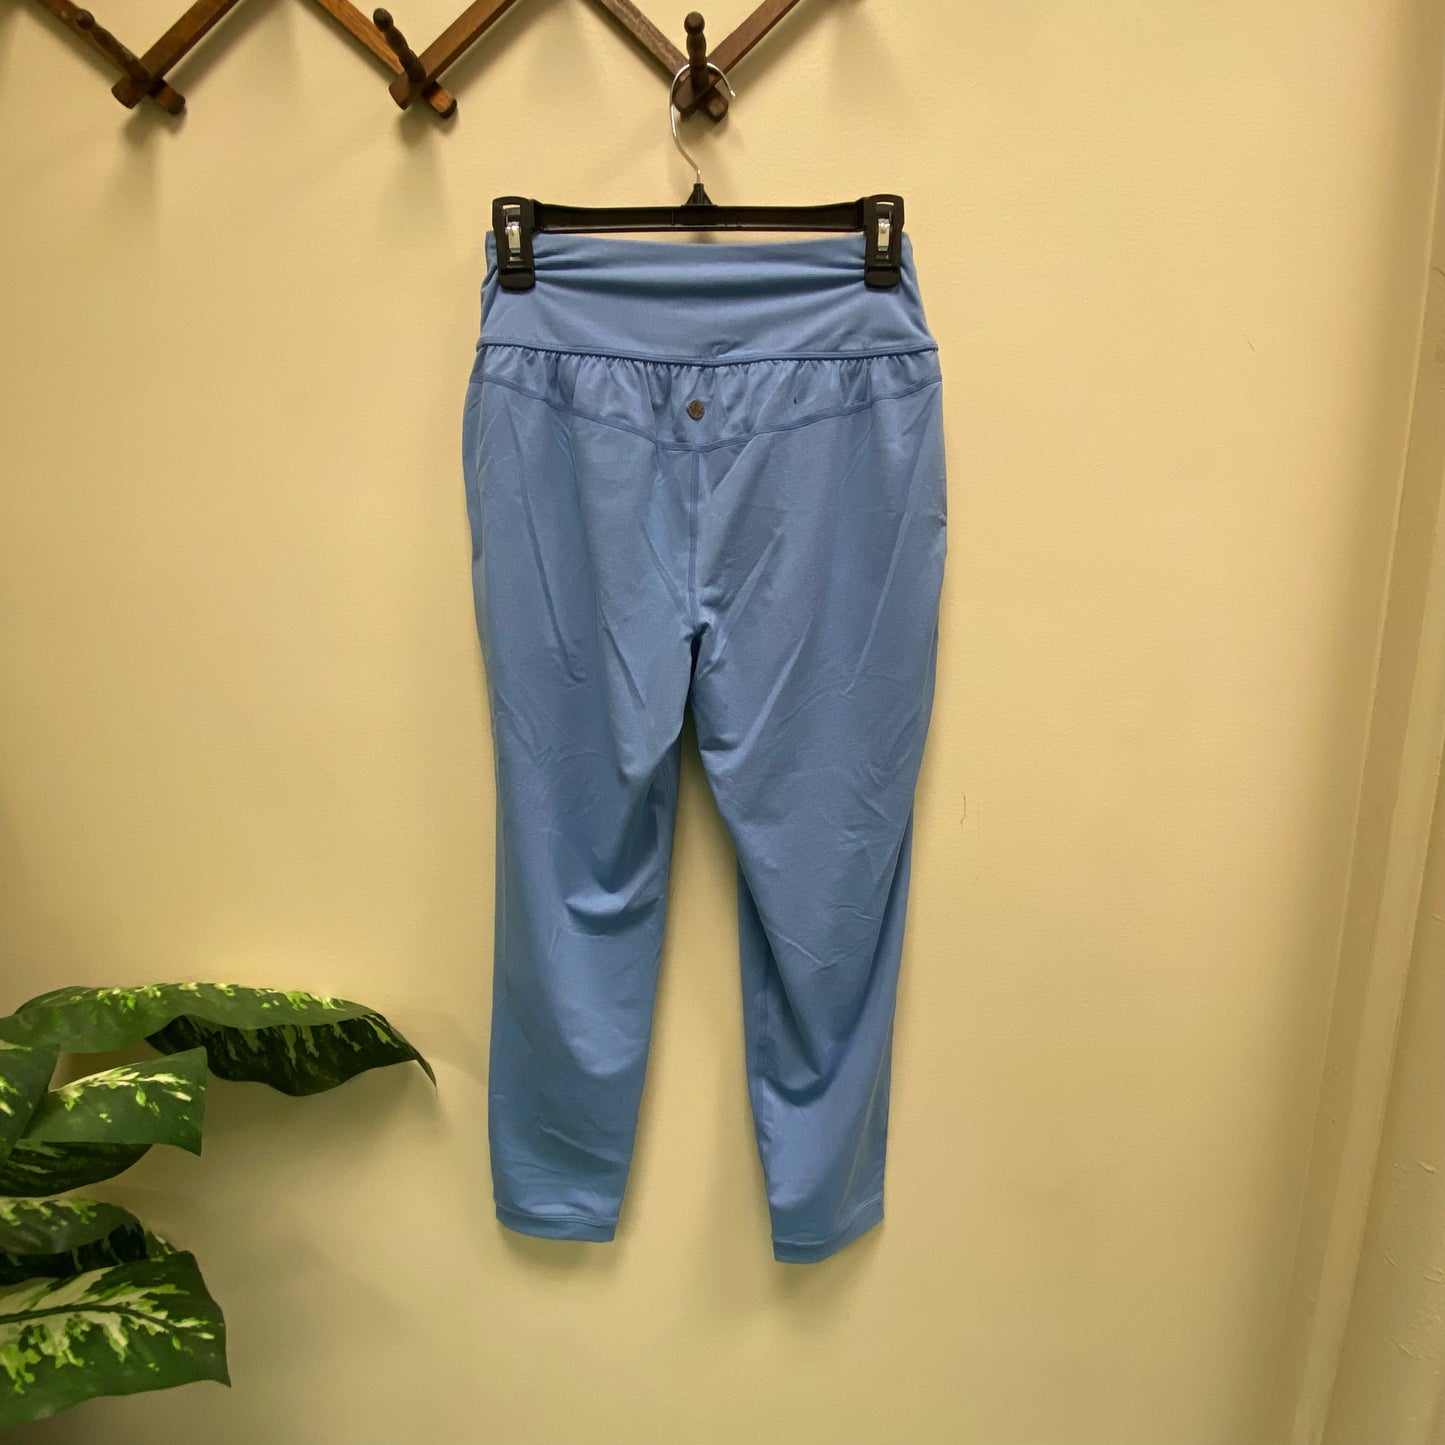 Prana Pull-On Pants - Size XS